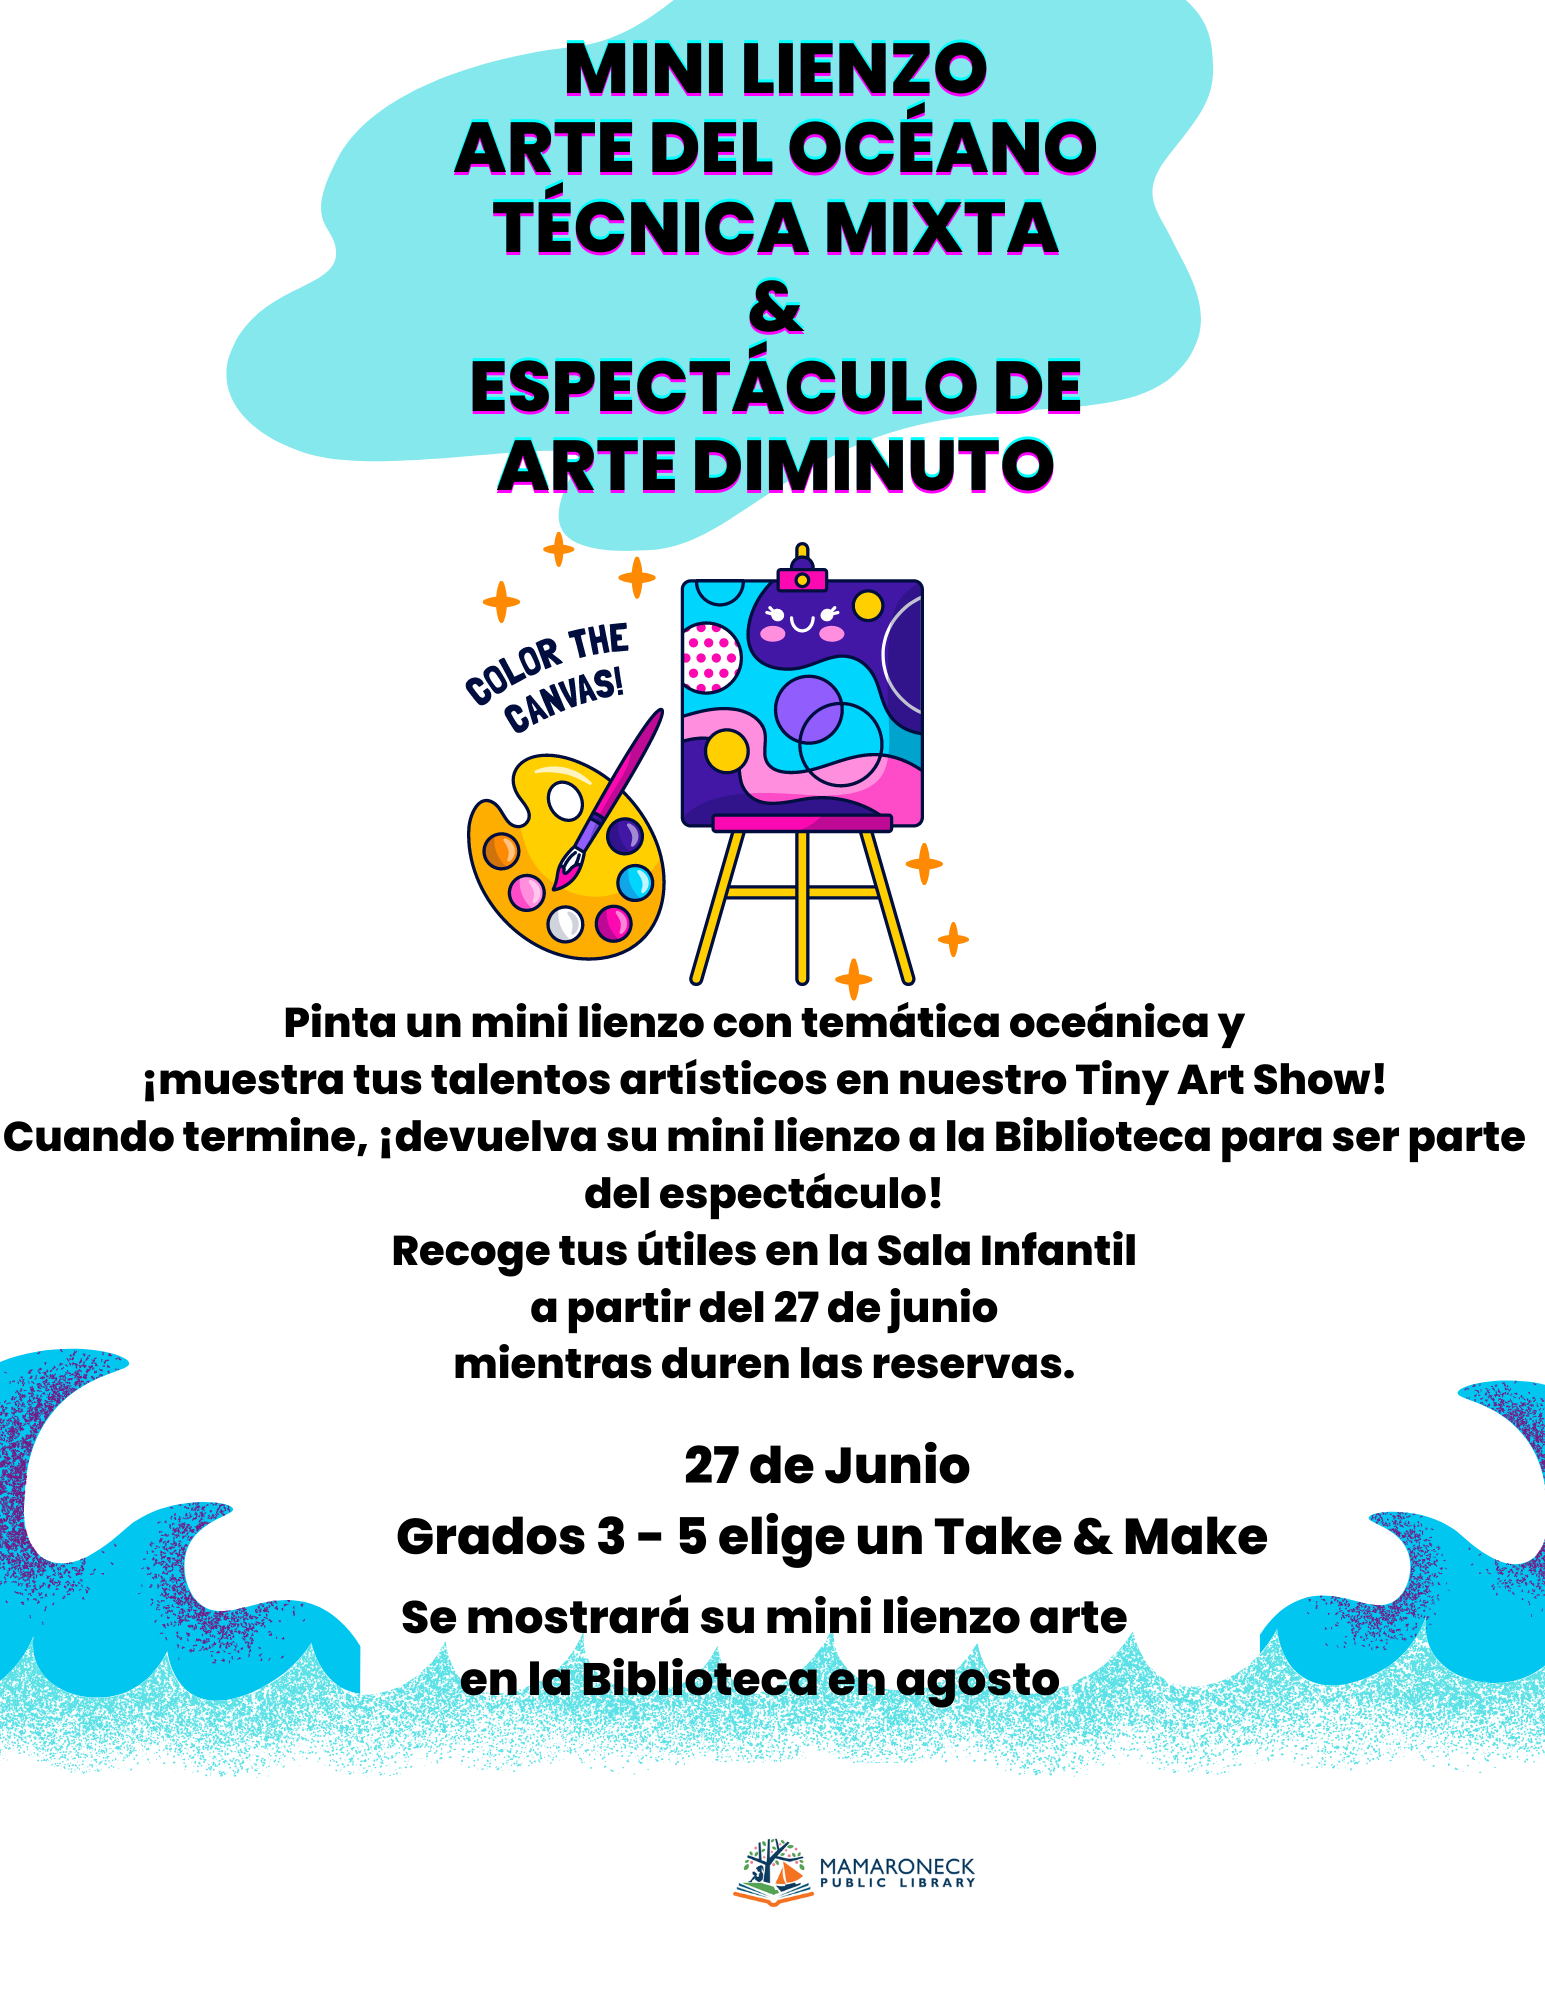 take and make for tweens mini canvas art bag in Spanish beginning June 27